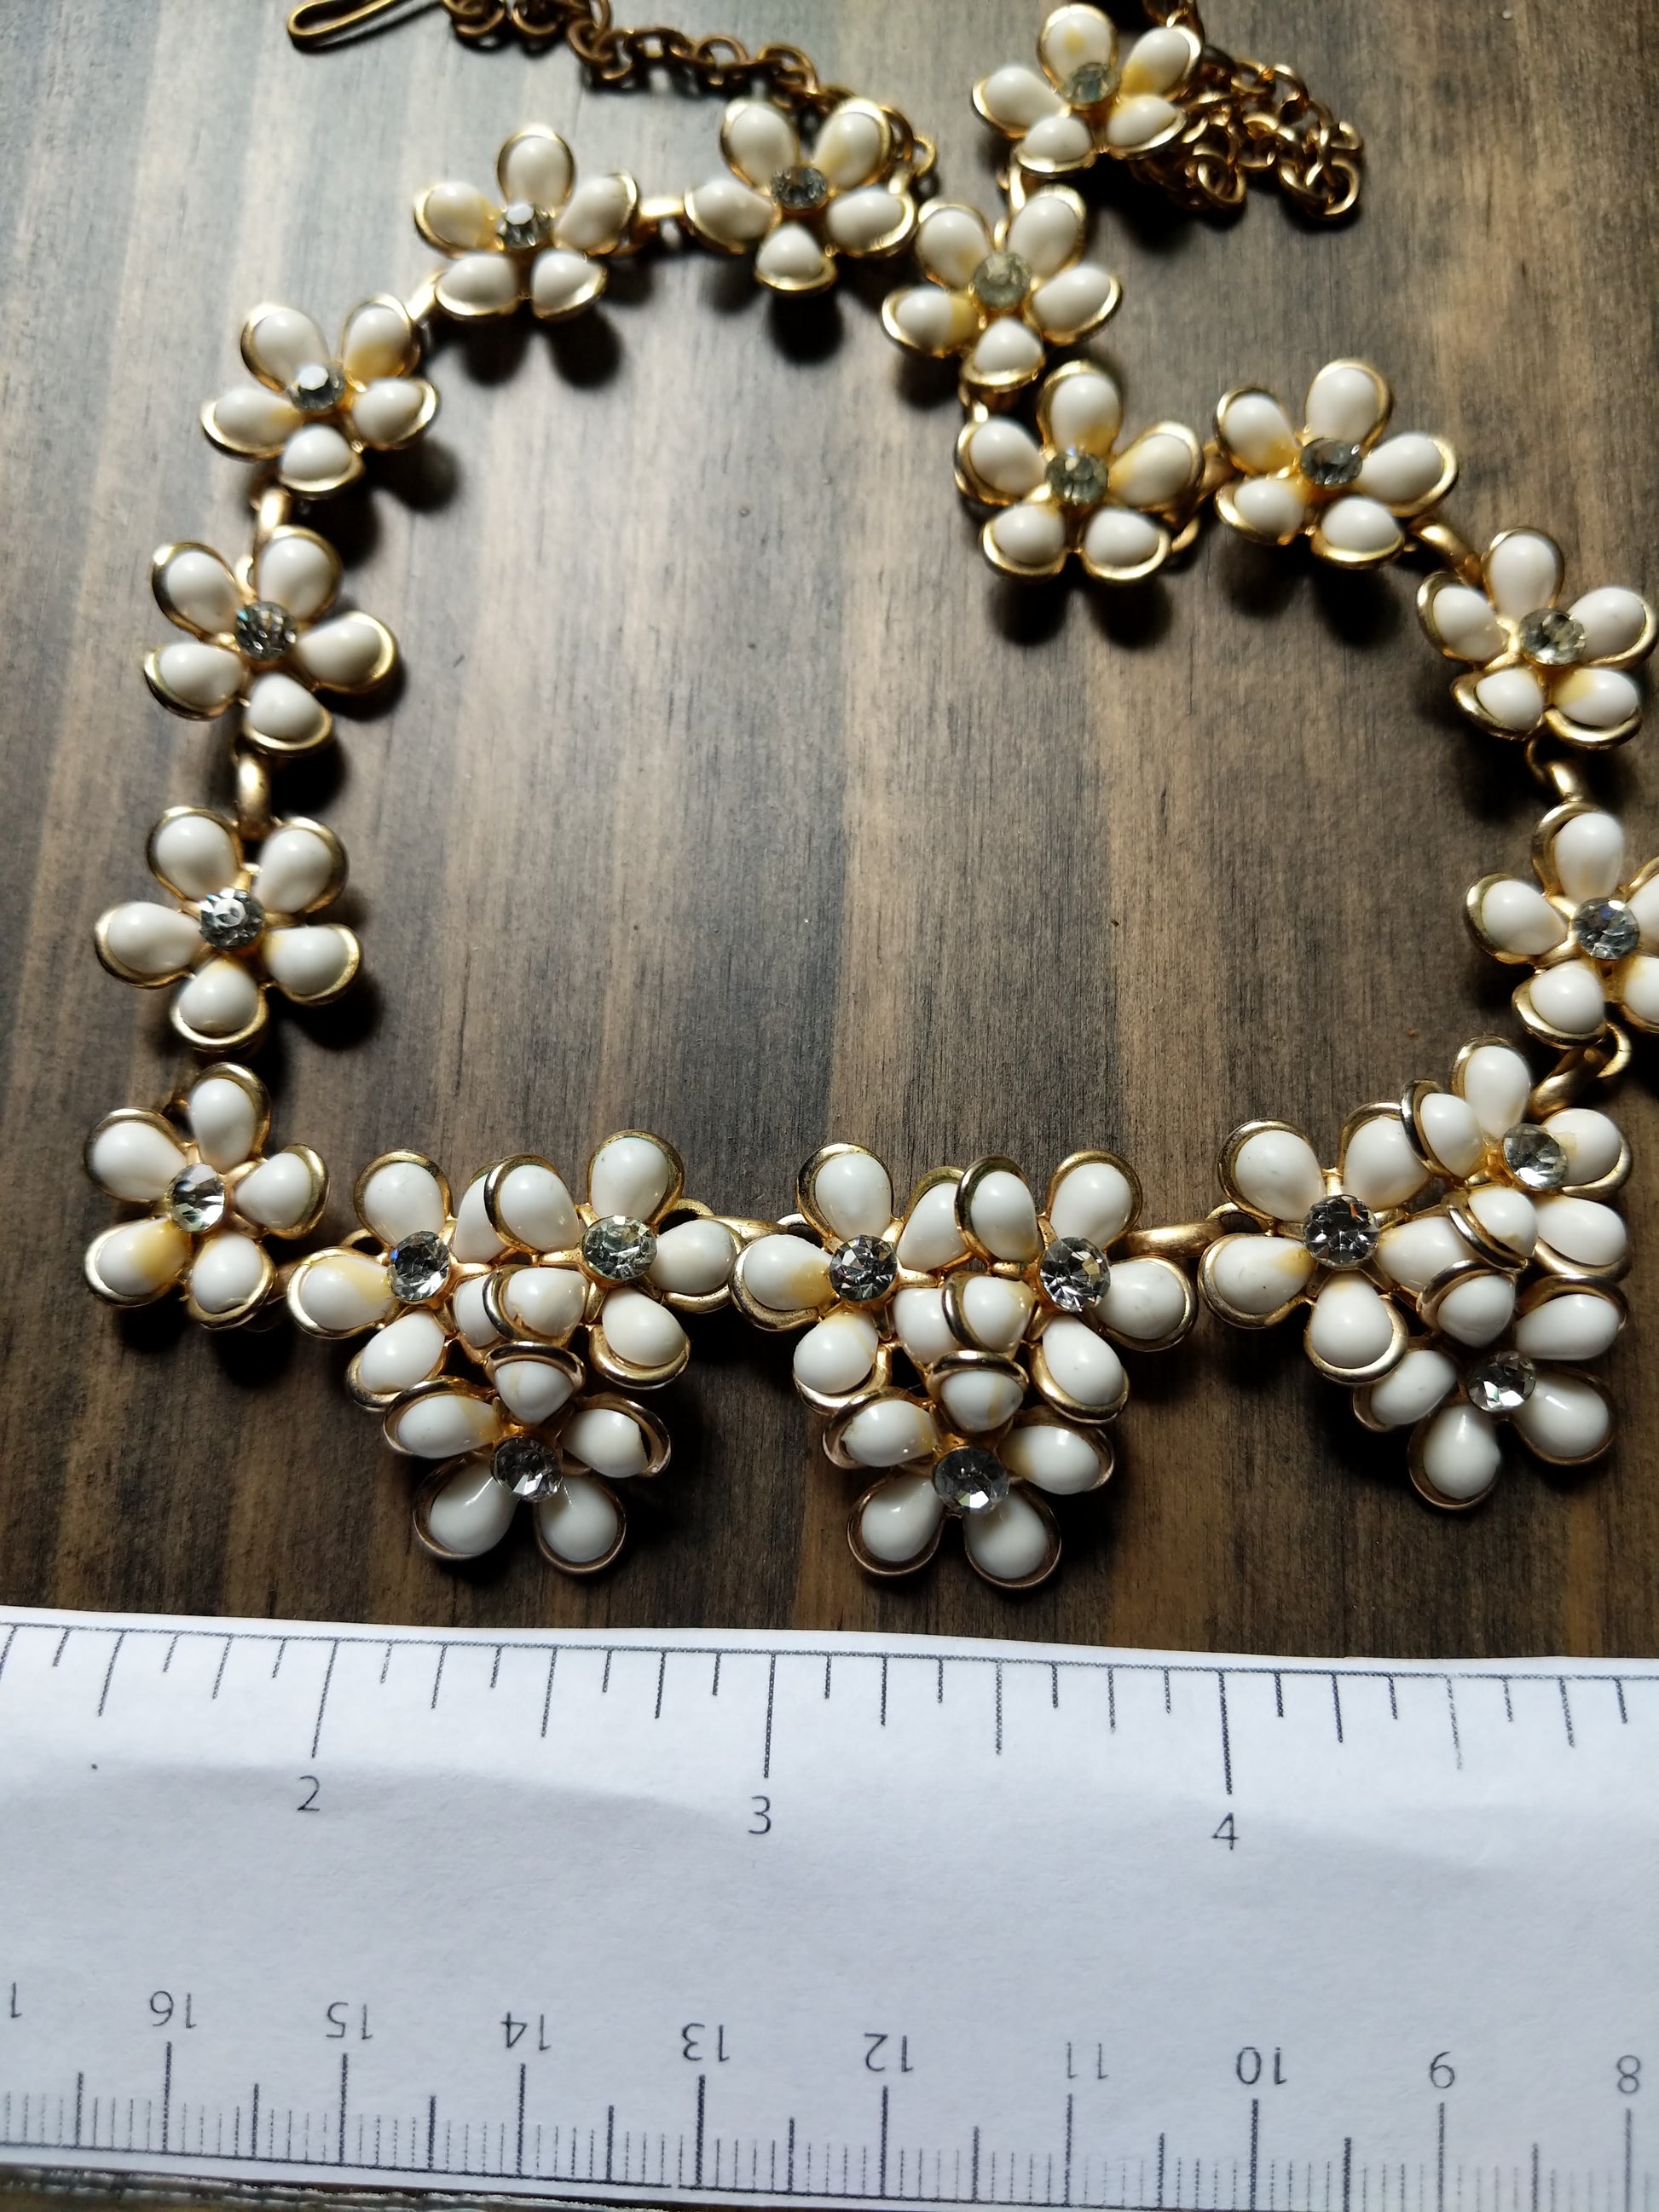 Vintage Necklace White Flower Choker